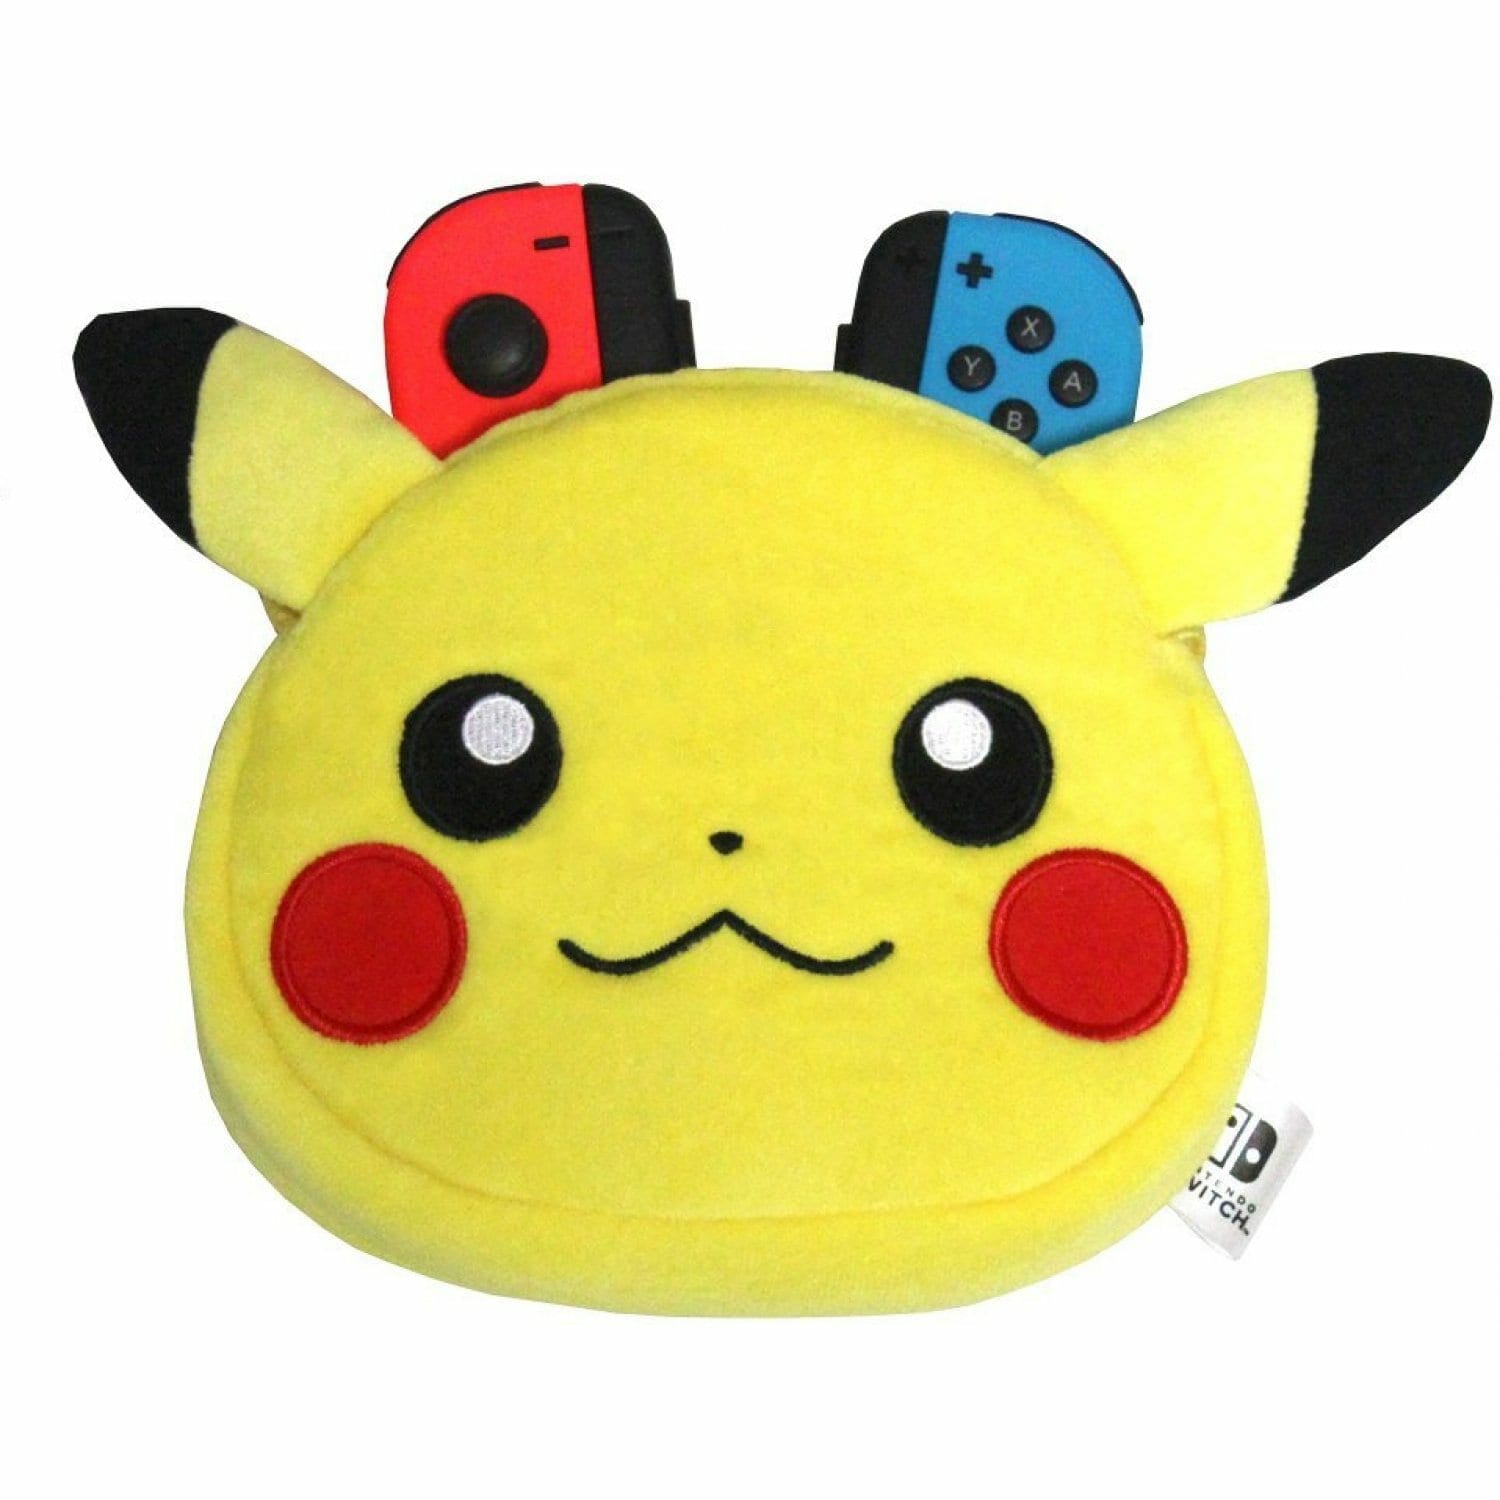 Nintendo Switch JOY-CON Pouch (Pikachu)